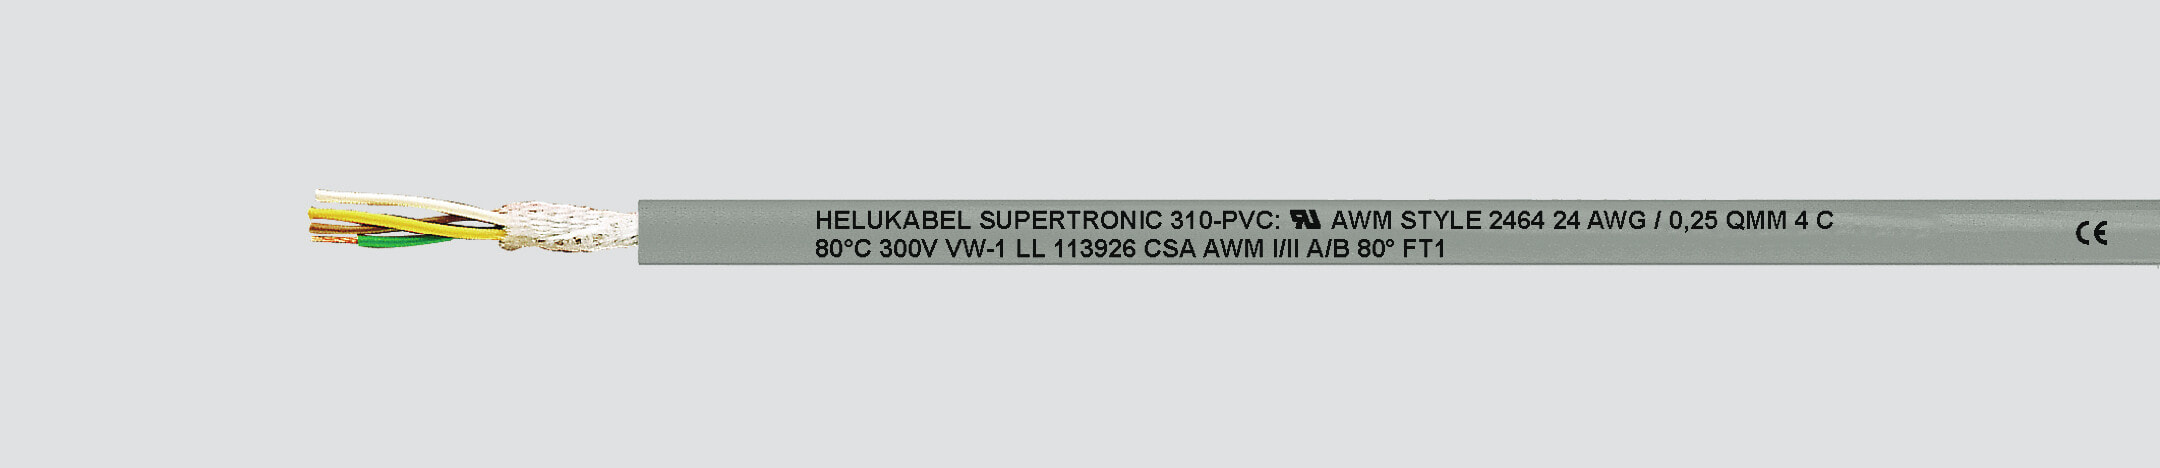 Helukabel 49912 - Low voltage cable - Grey - Polyvinyl chloride (PVC) - 0.34 mm² - 117 kg/km - -5 - 80 °C